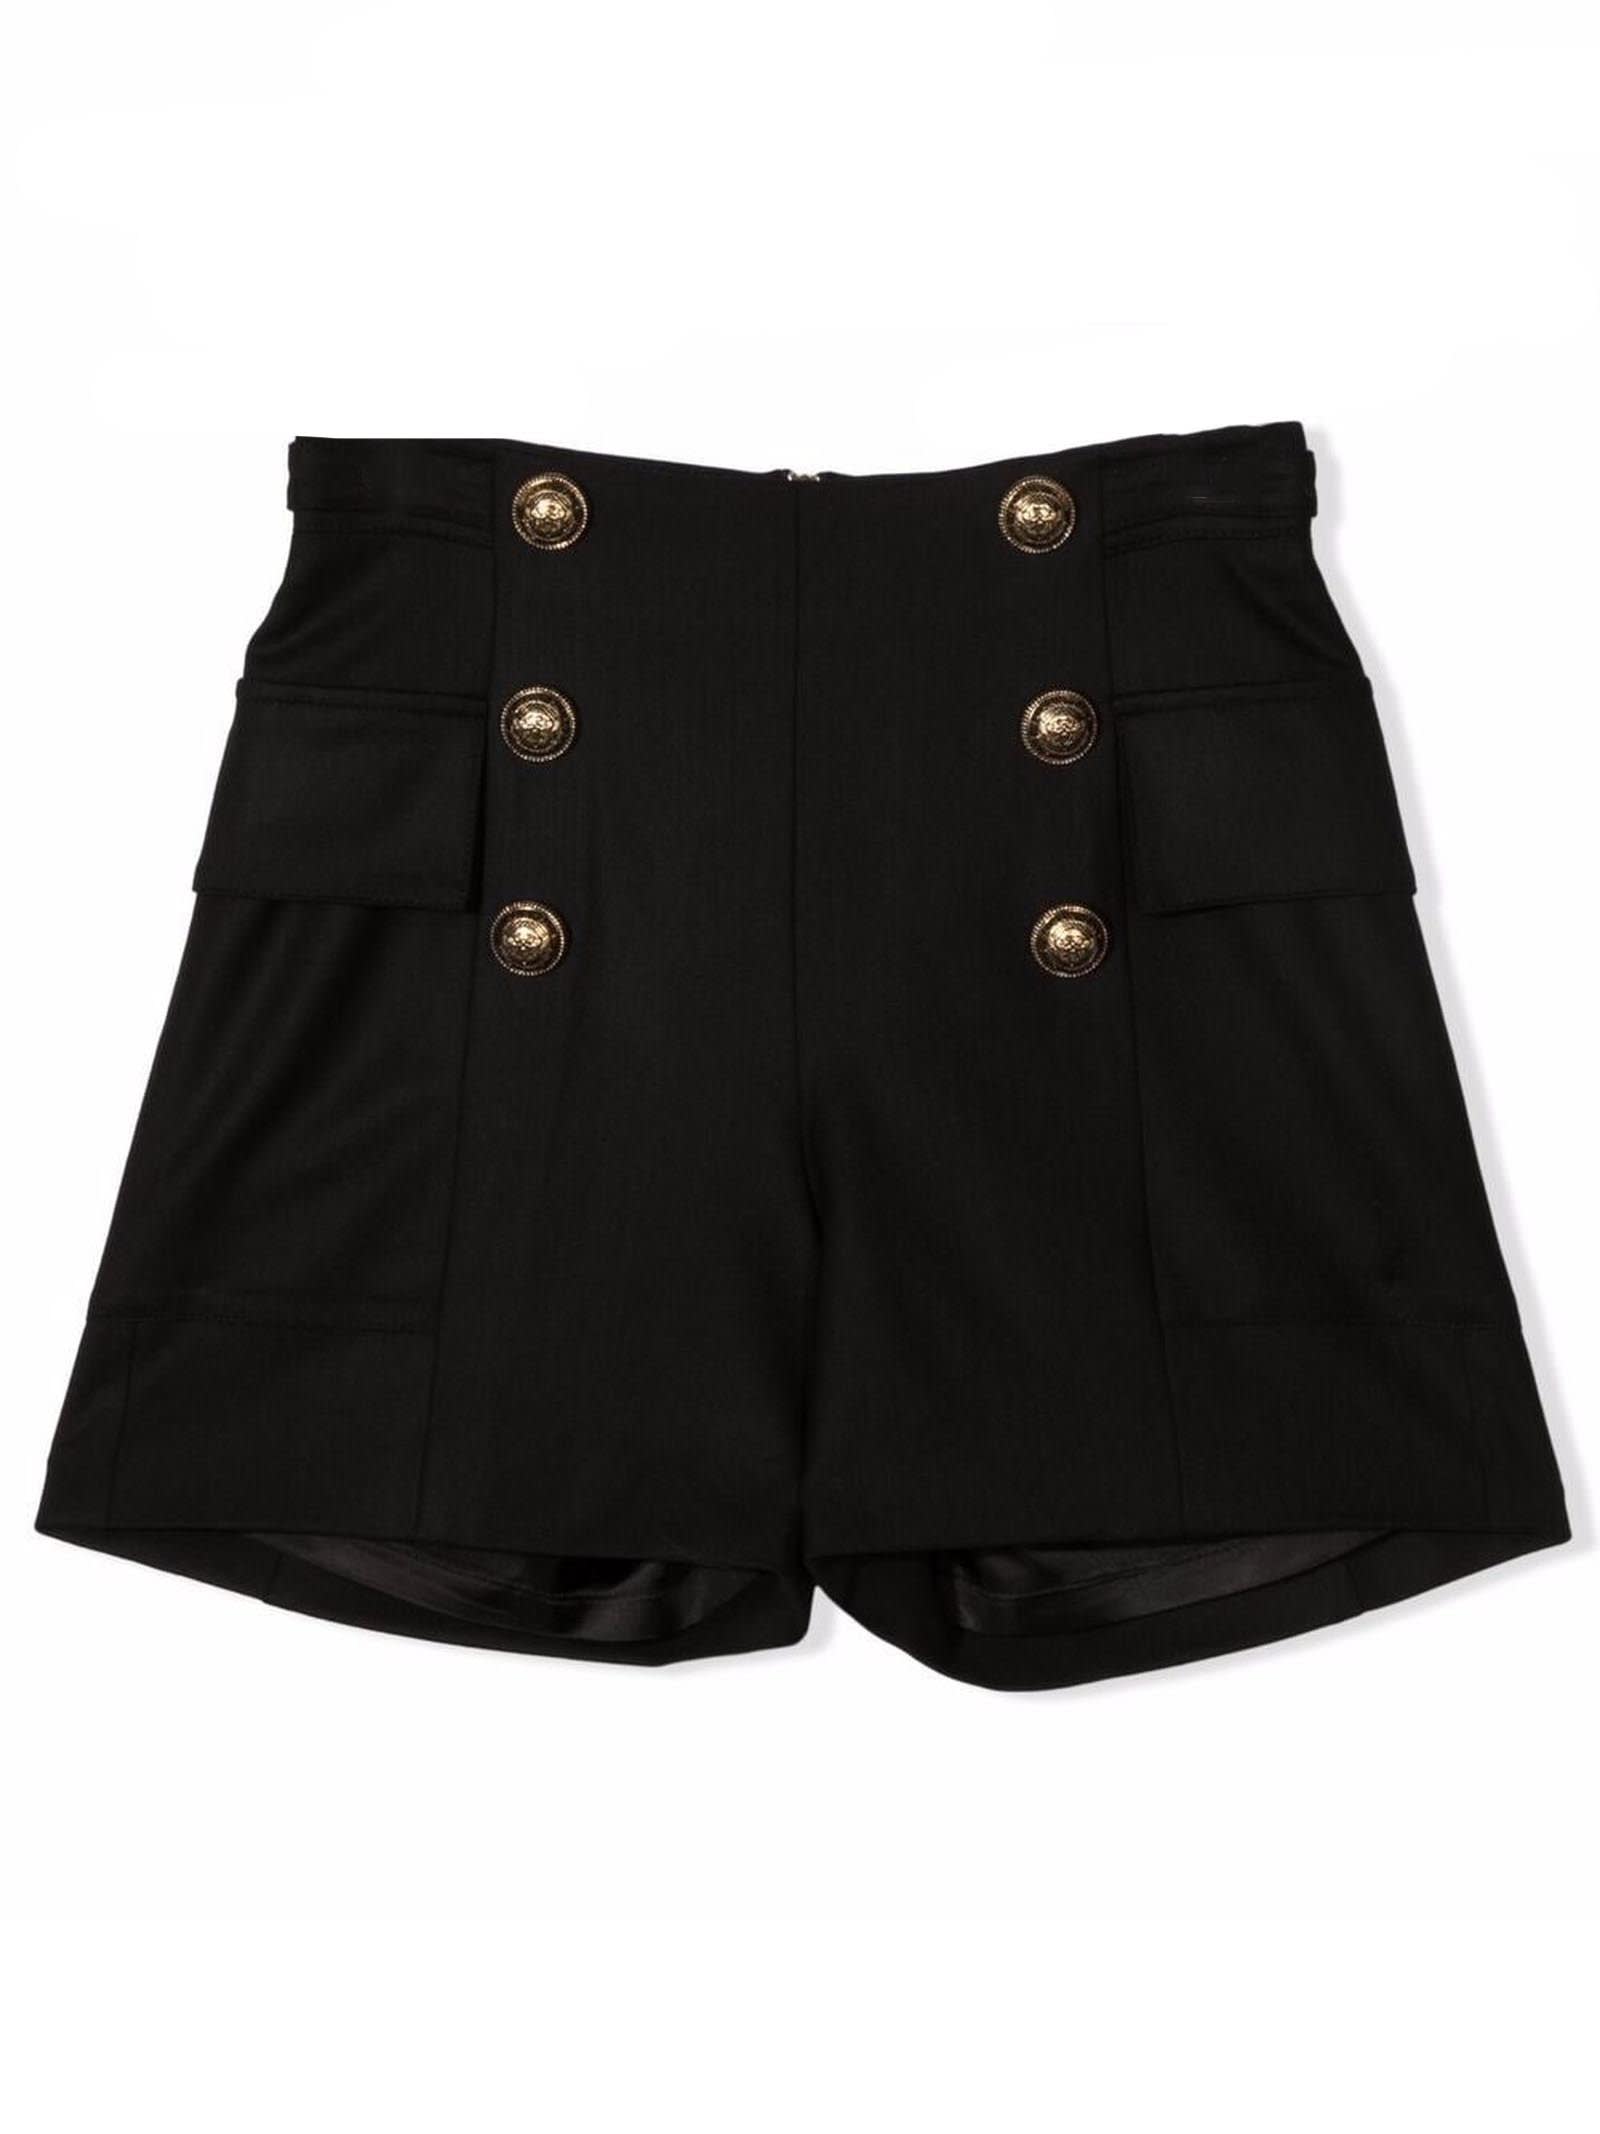 Balmain Black Virgin Wool Blend Shorts